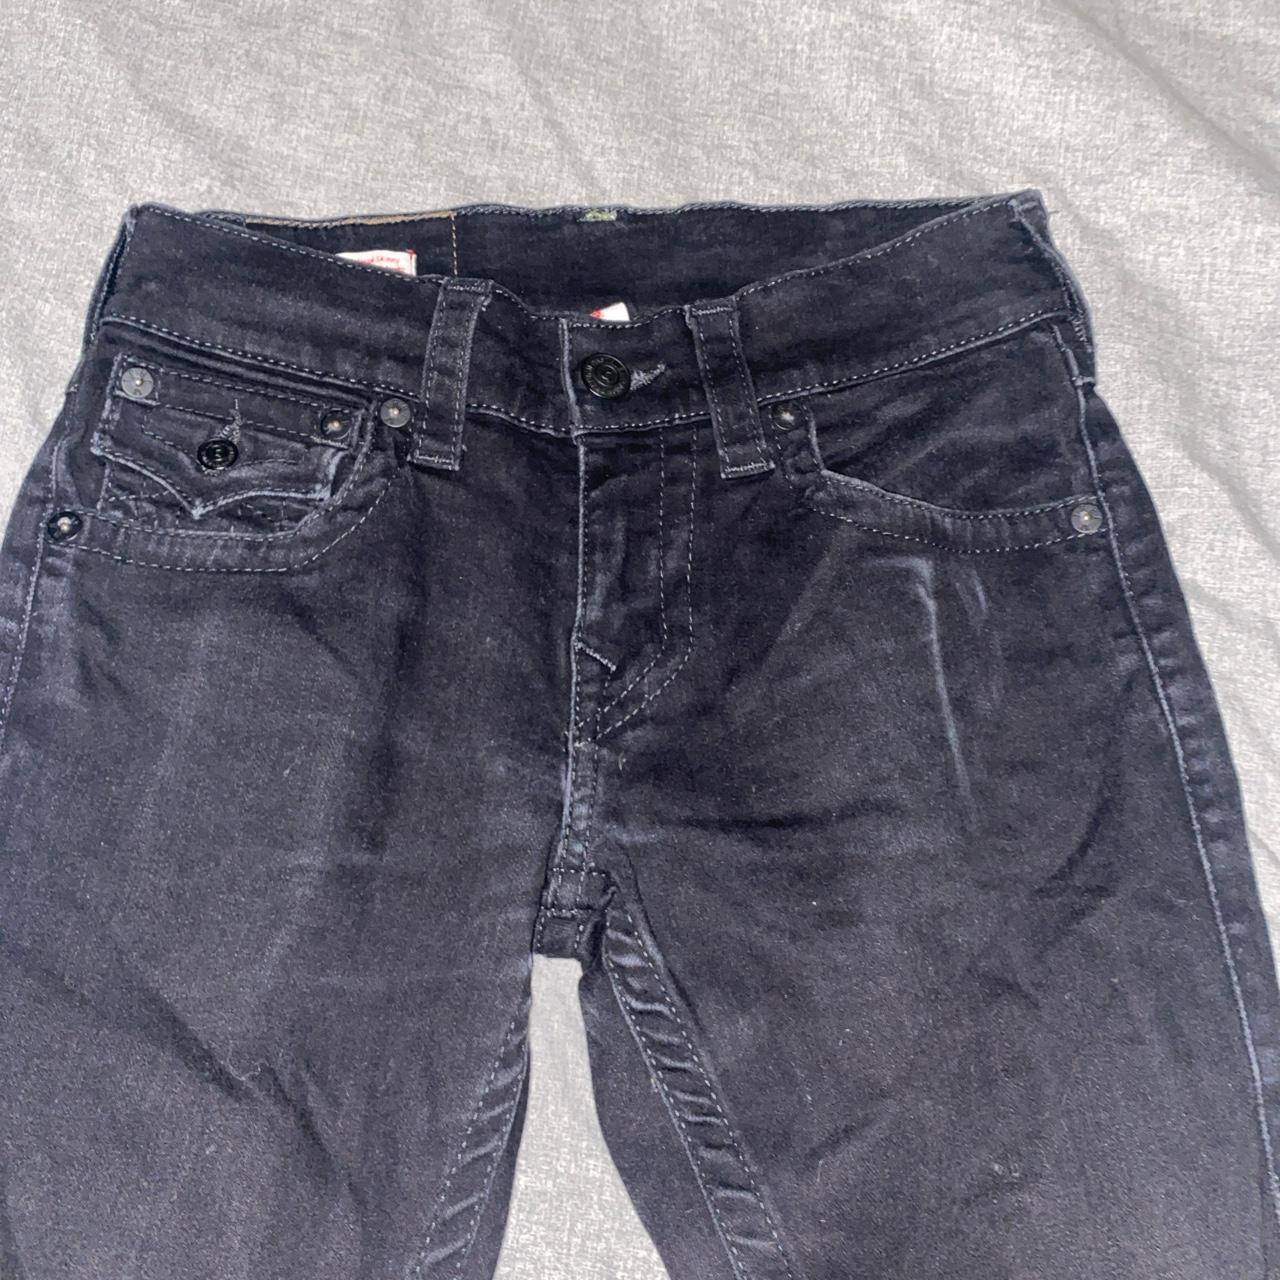 True religion jeans in good condition - Depop